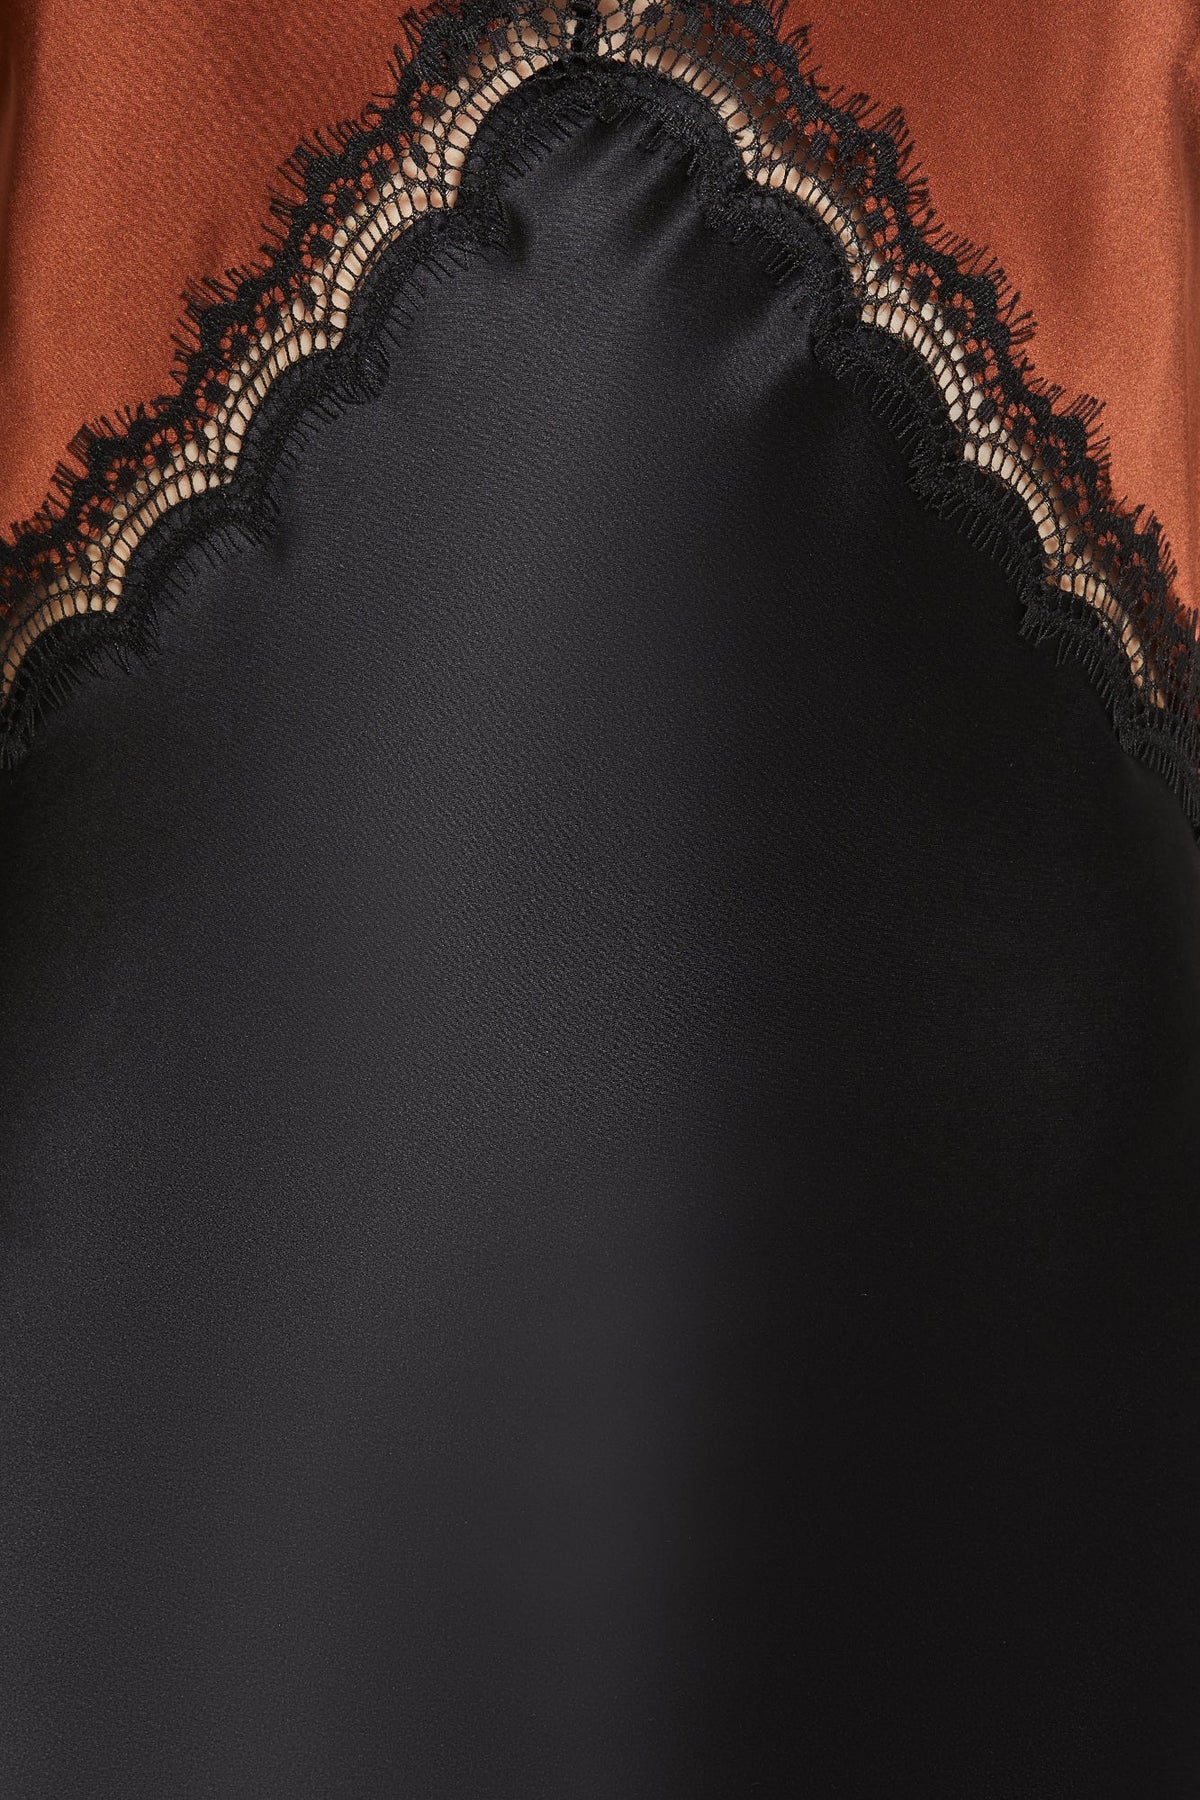 The Sadie Dress in Gingerbread Black - 100% Silk by Ginia RTW